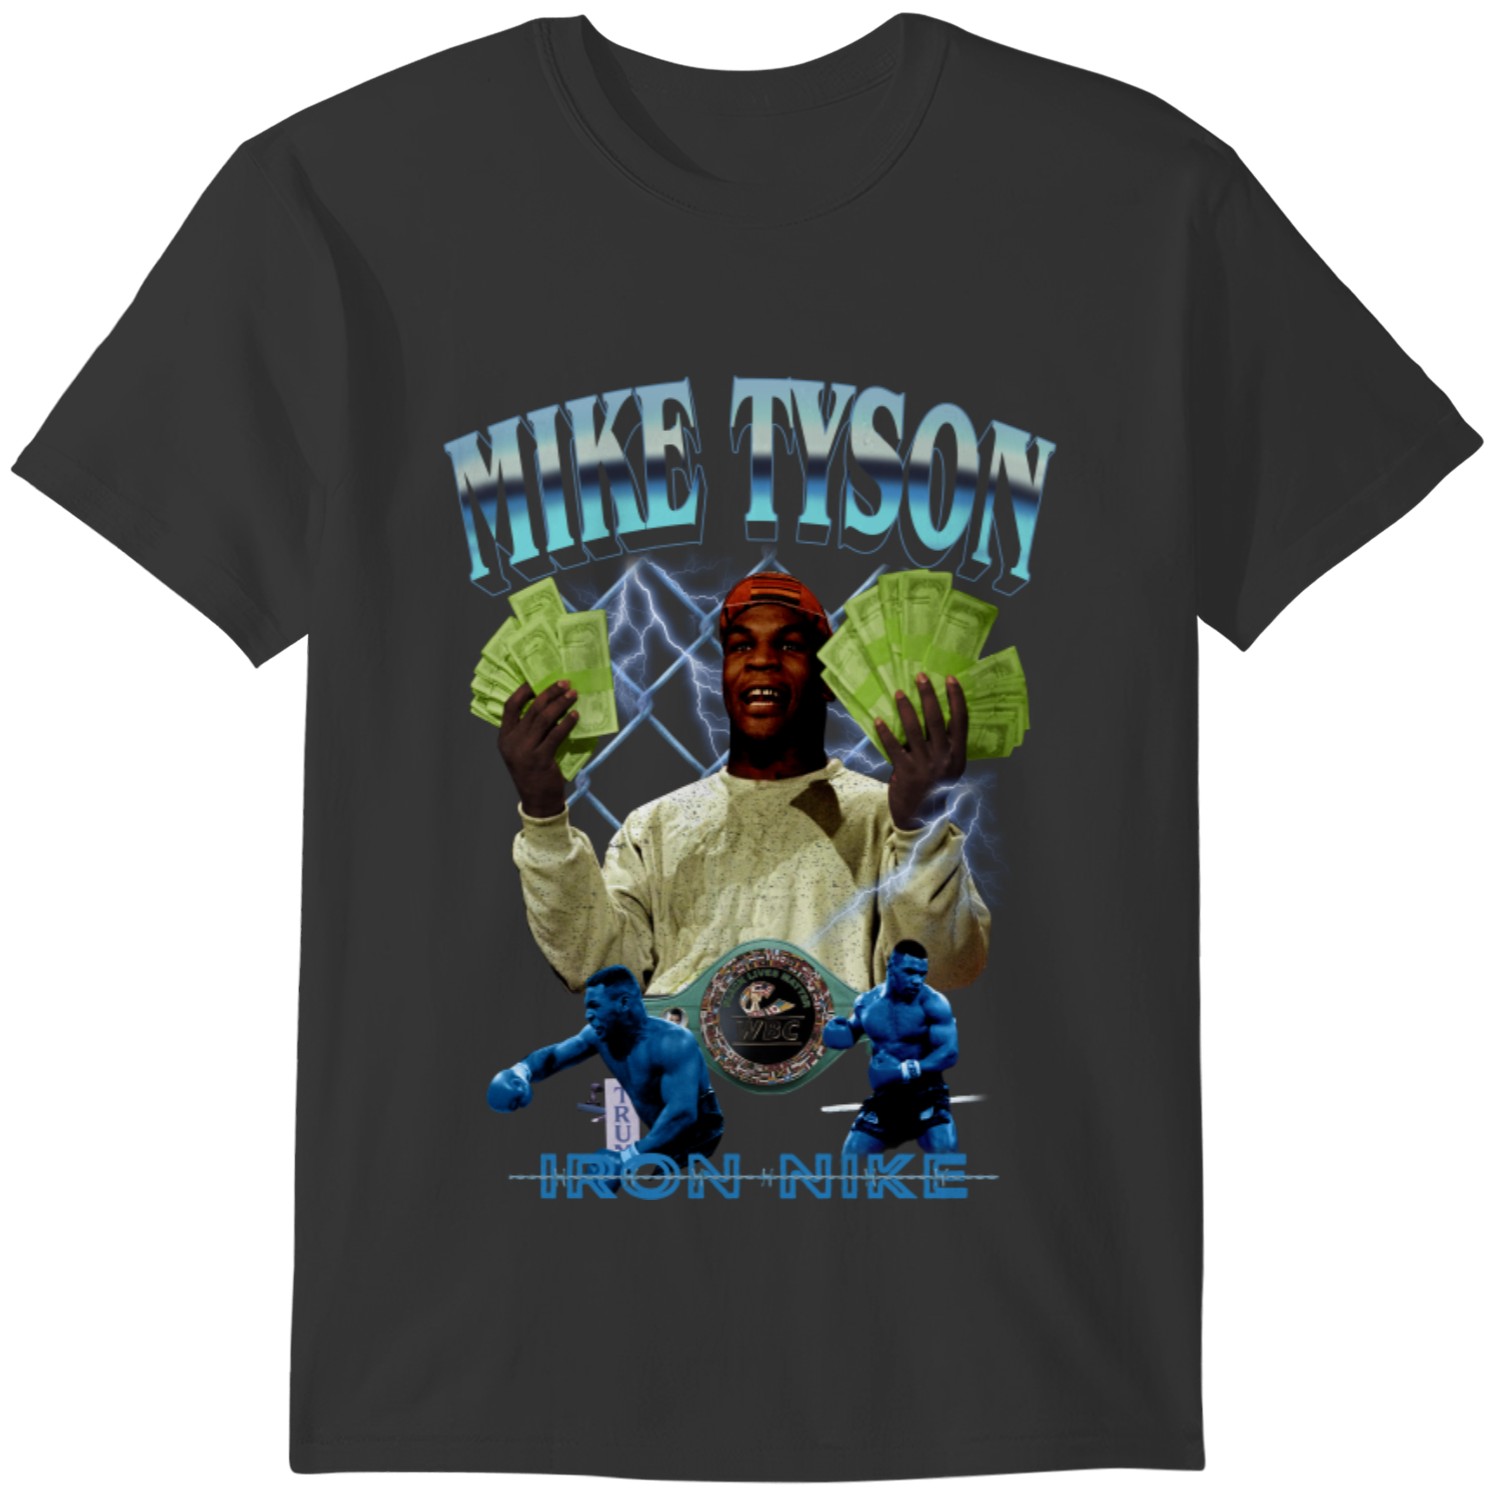 Tyson T-Shirt Vintage, Mike Tyson Retro Vintage Graphic Boxing T-Shirt